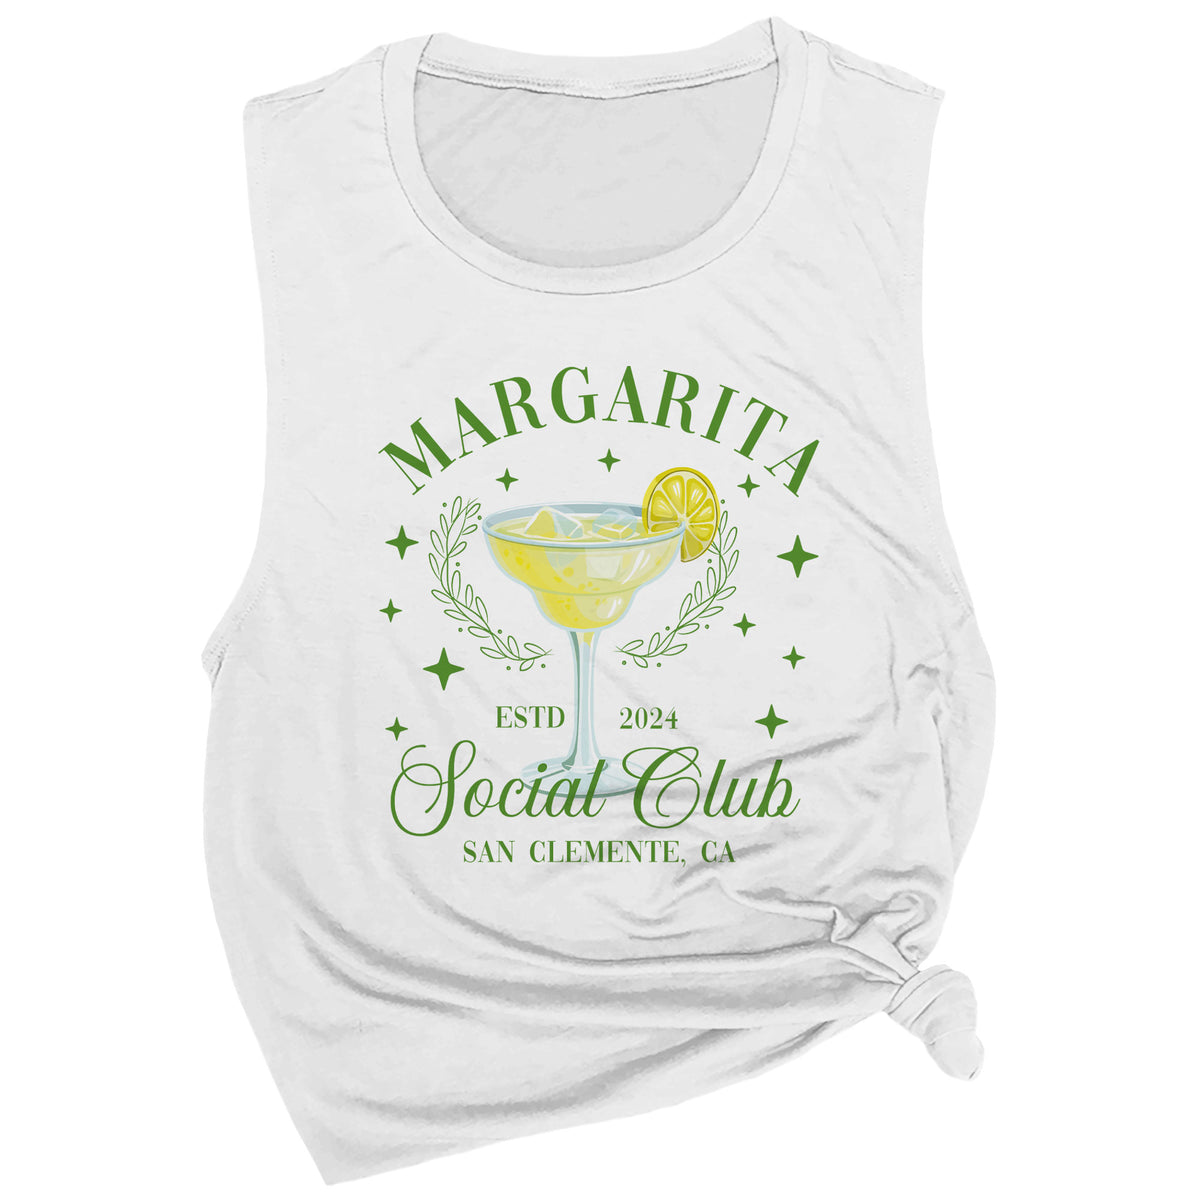 Margarita Social Club Muscle Tee